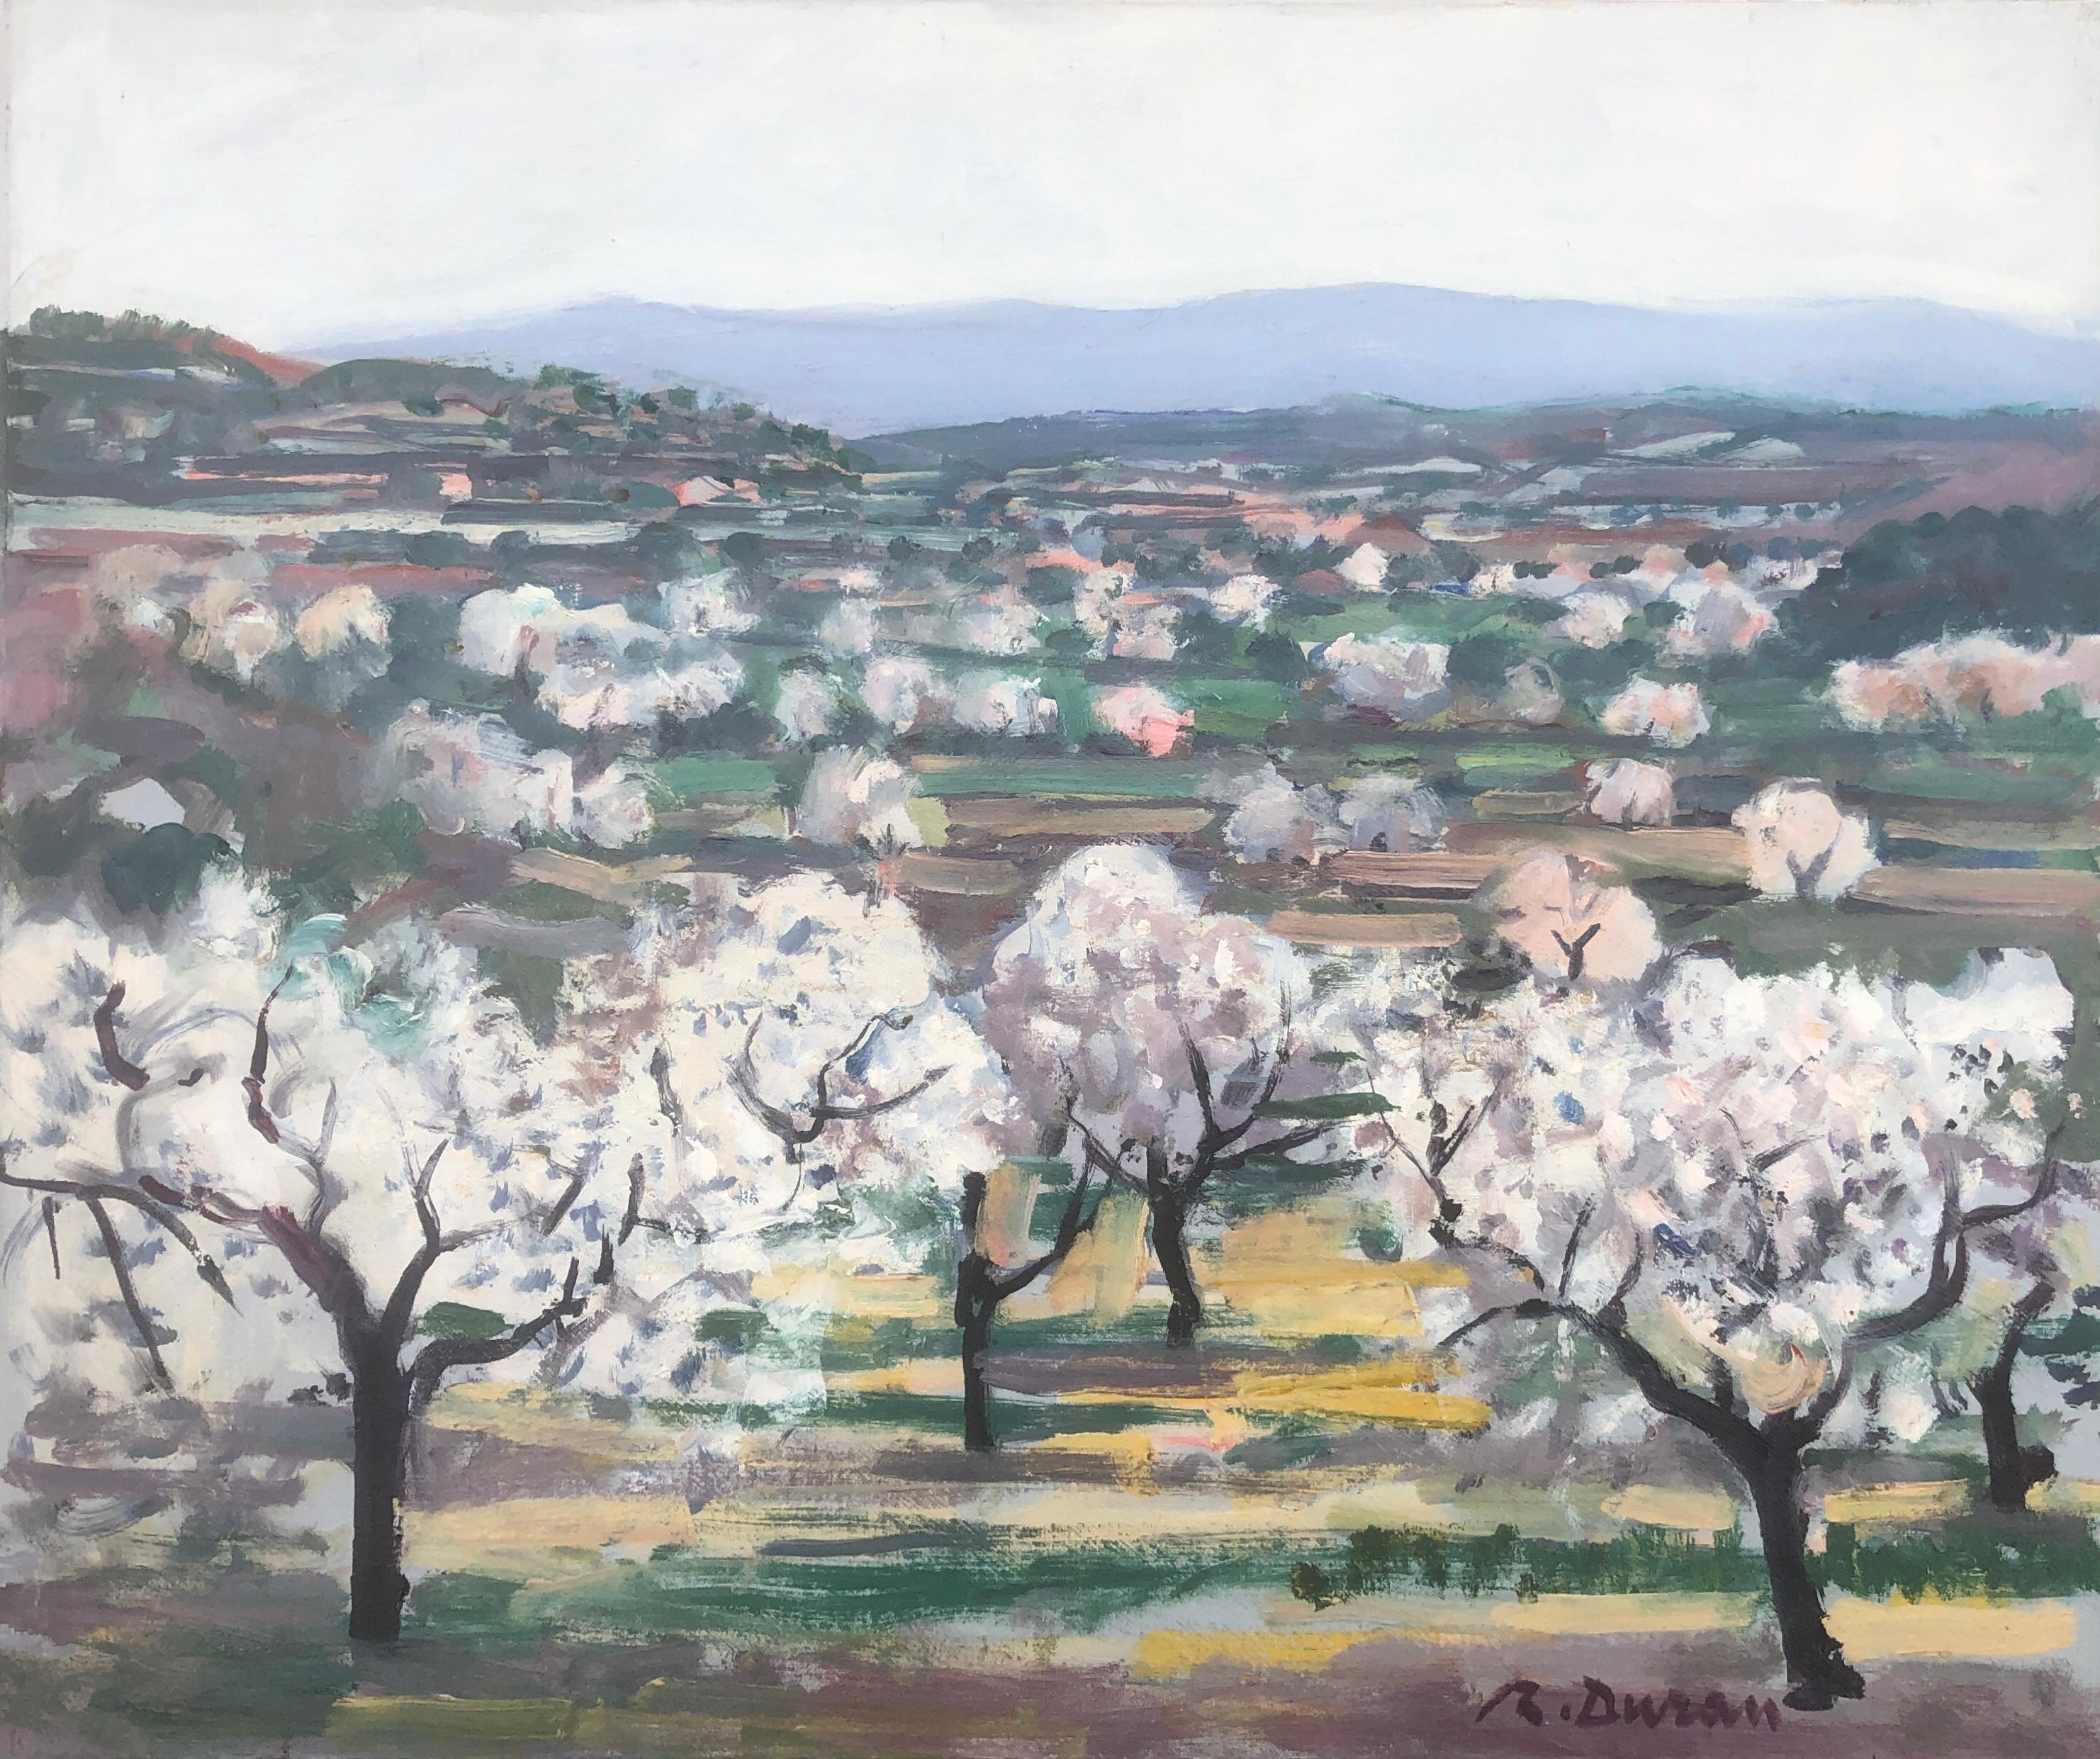 Rafael Duran Benet Landscape Painting - almond trees in bloom Spain oil painting spanish landscape